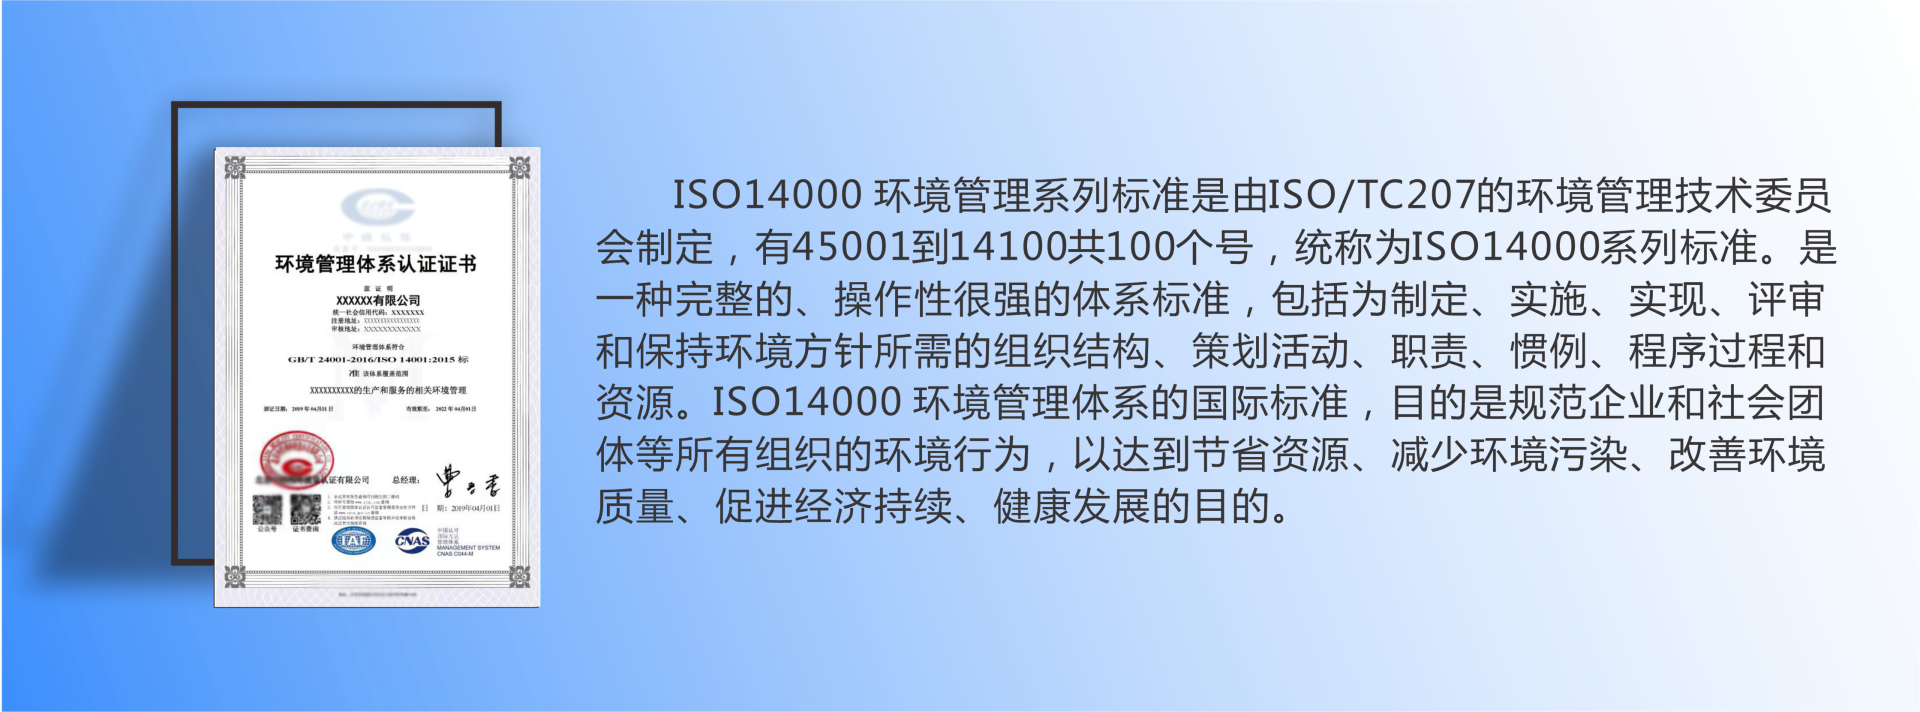 龙泉驿iso14001认证  环境管理体系认证机构  iso14001环境管理体系认证示例图2